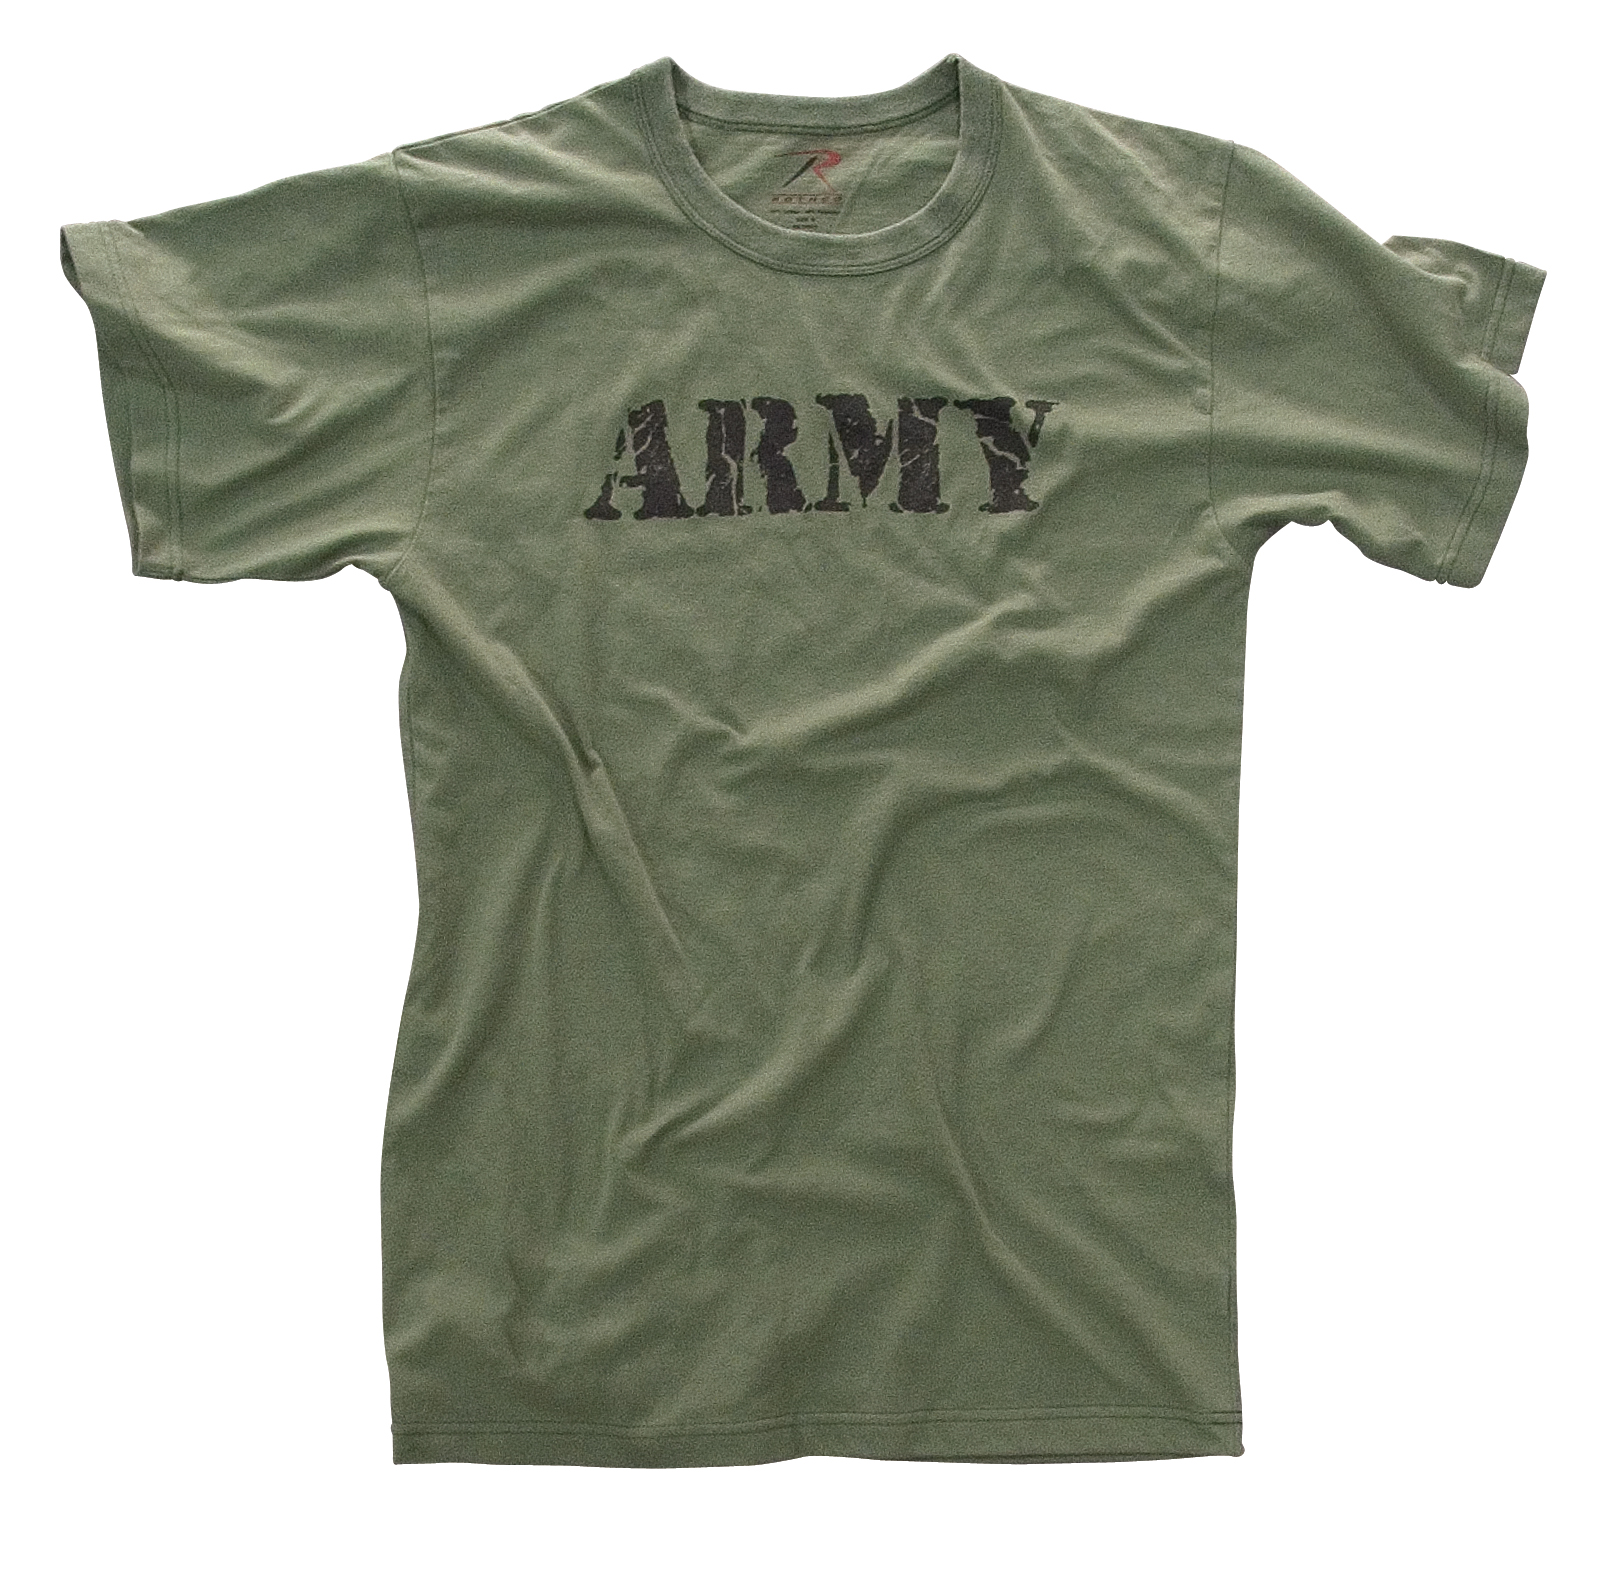 Vintage Army Shirt 67